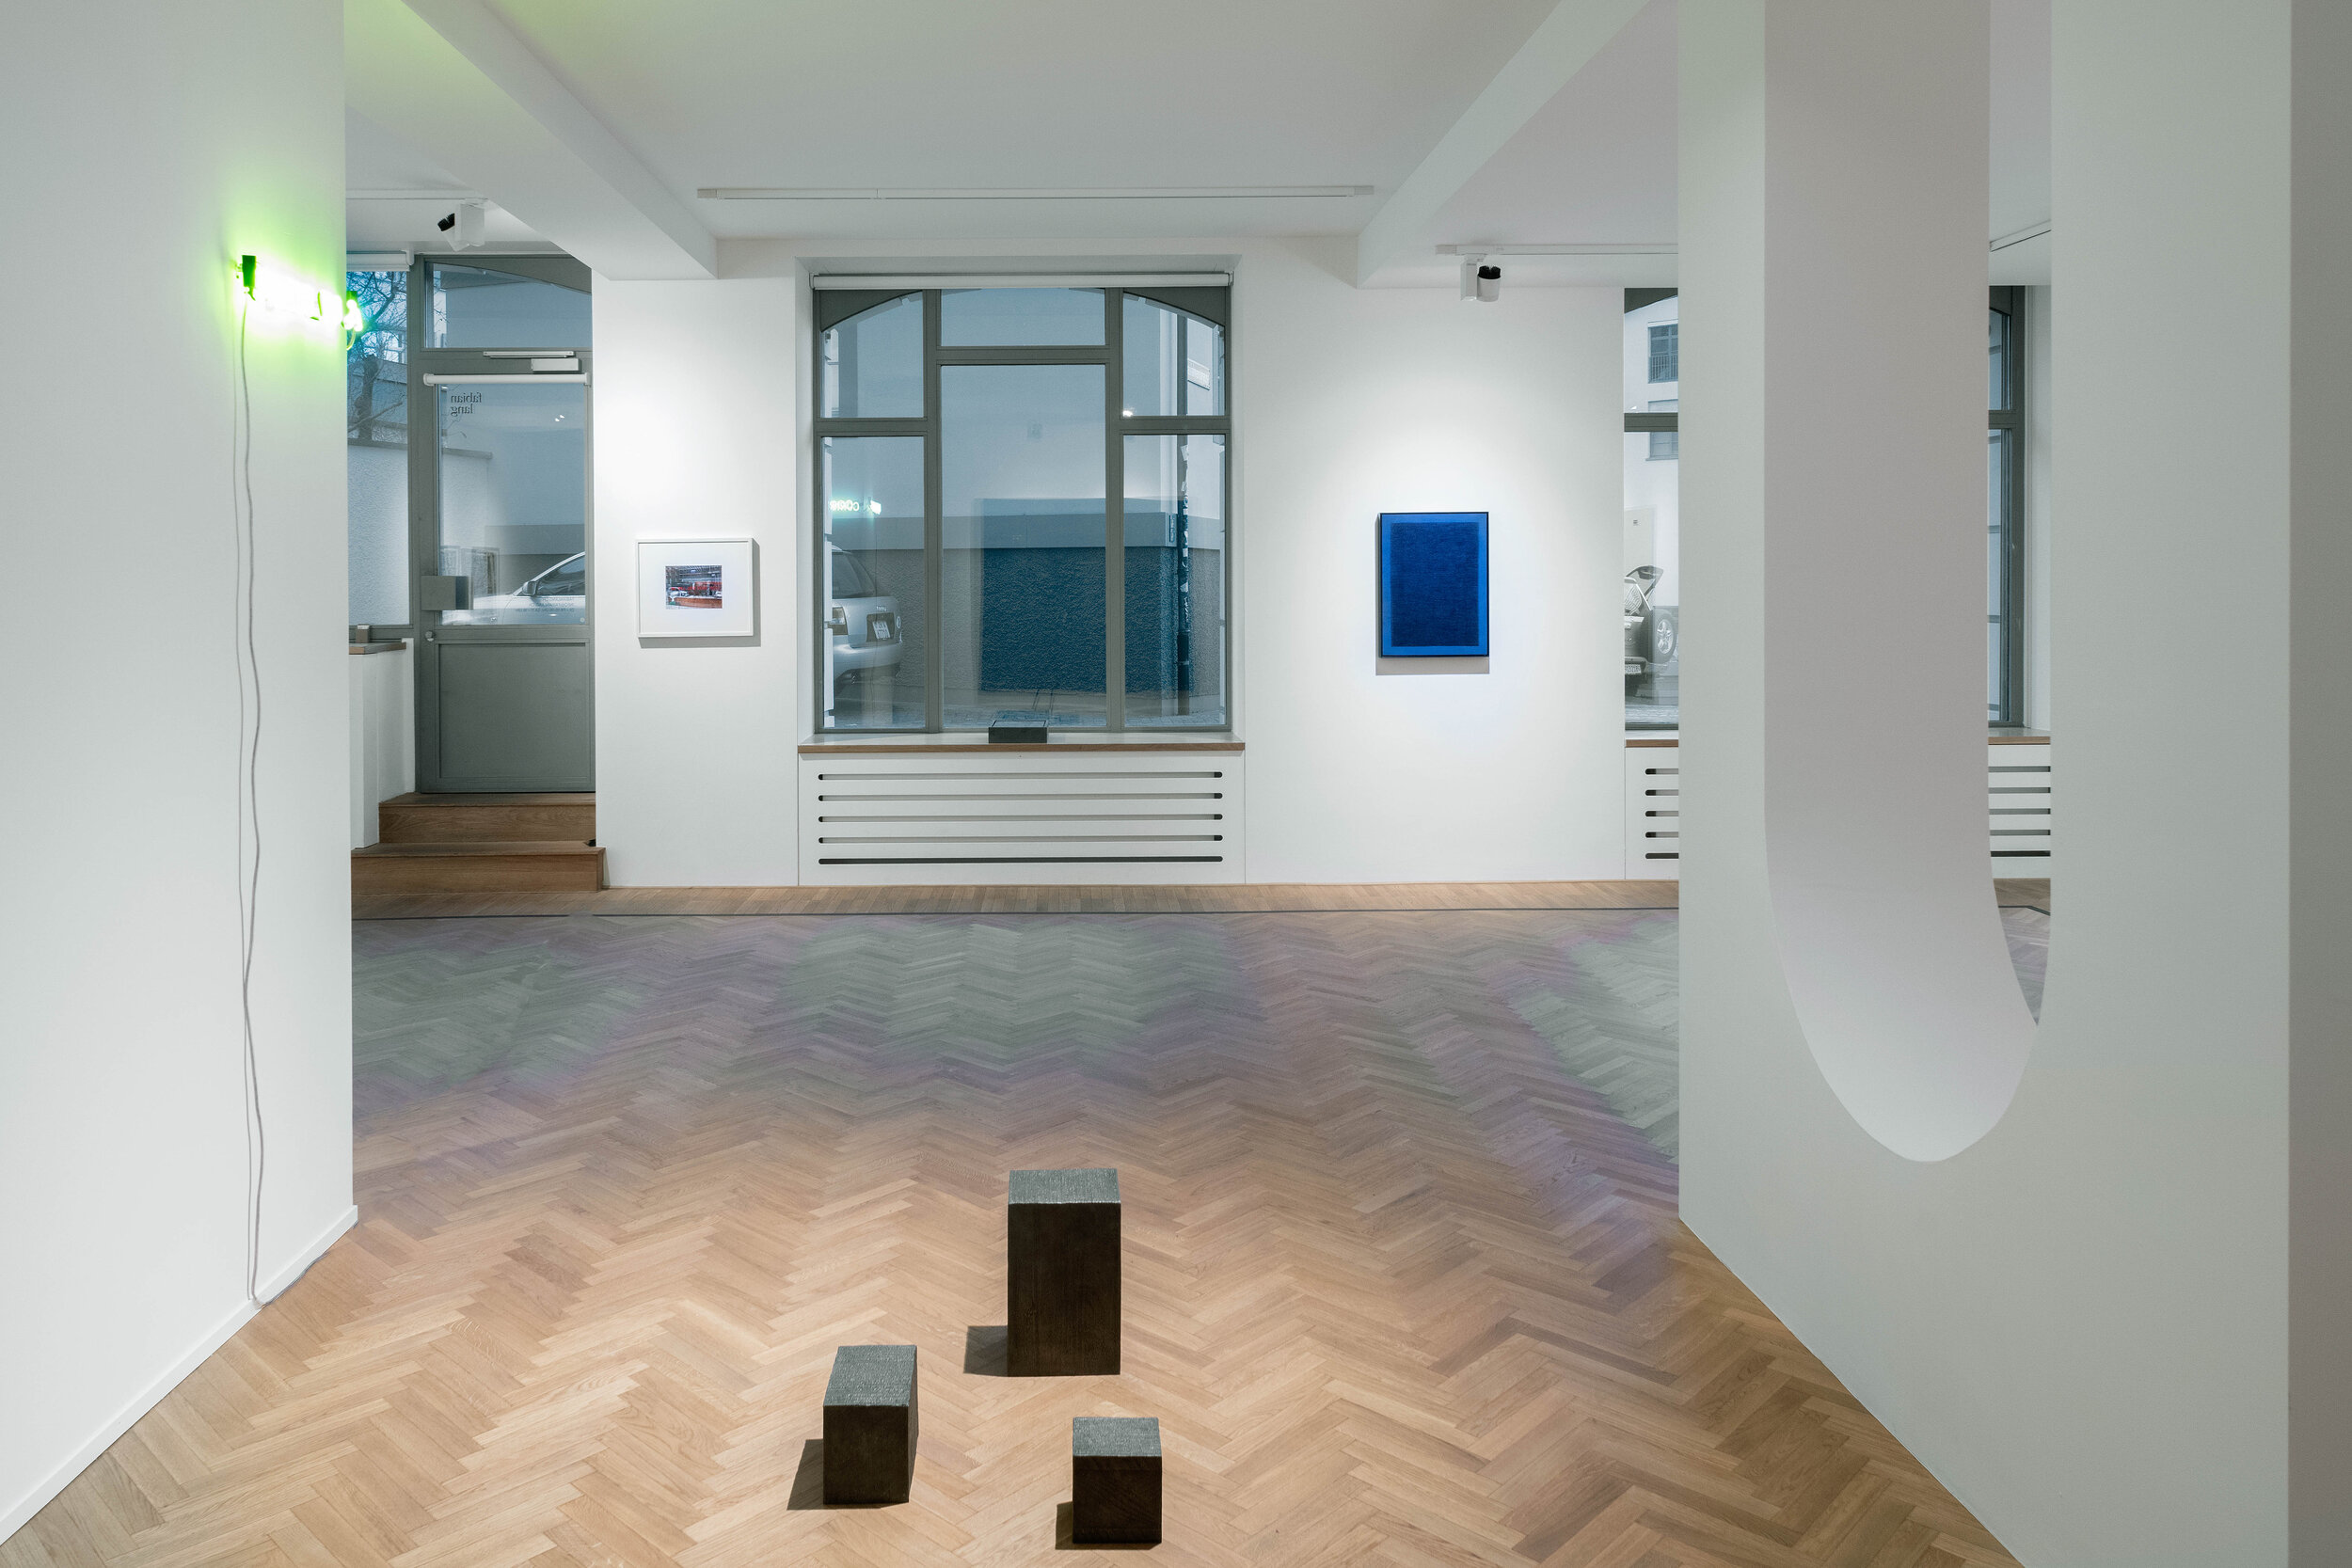  Installation shot of "revert to type" exhibition at Fabian Lang, Zurich 